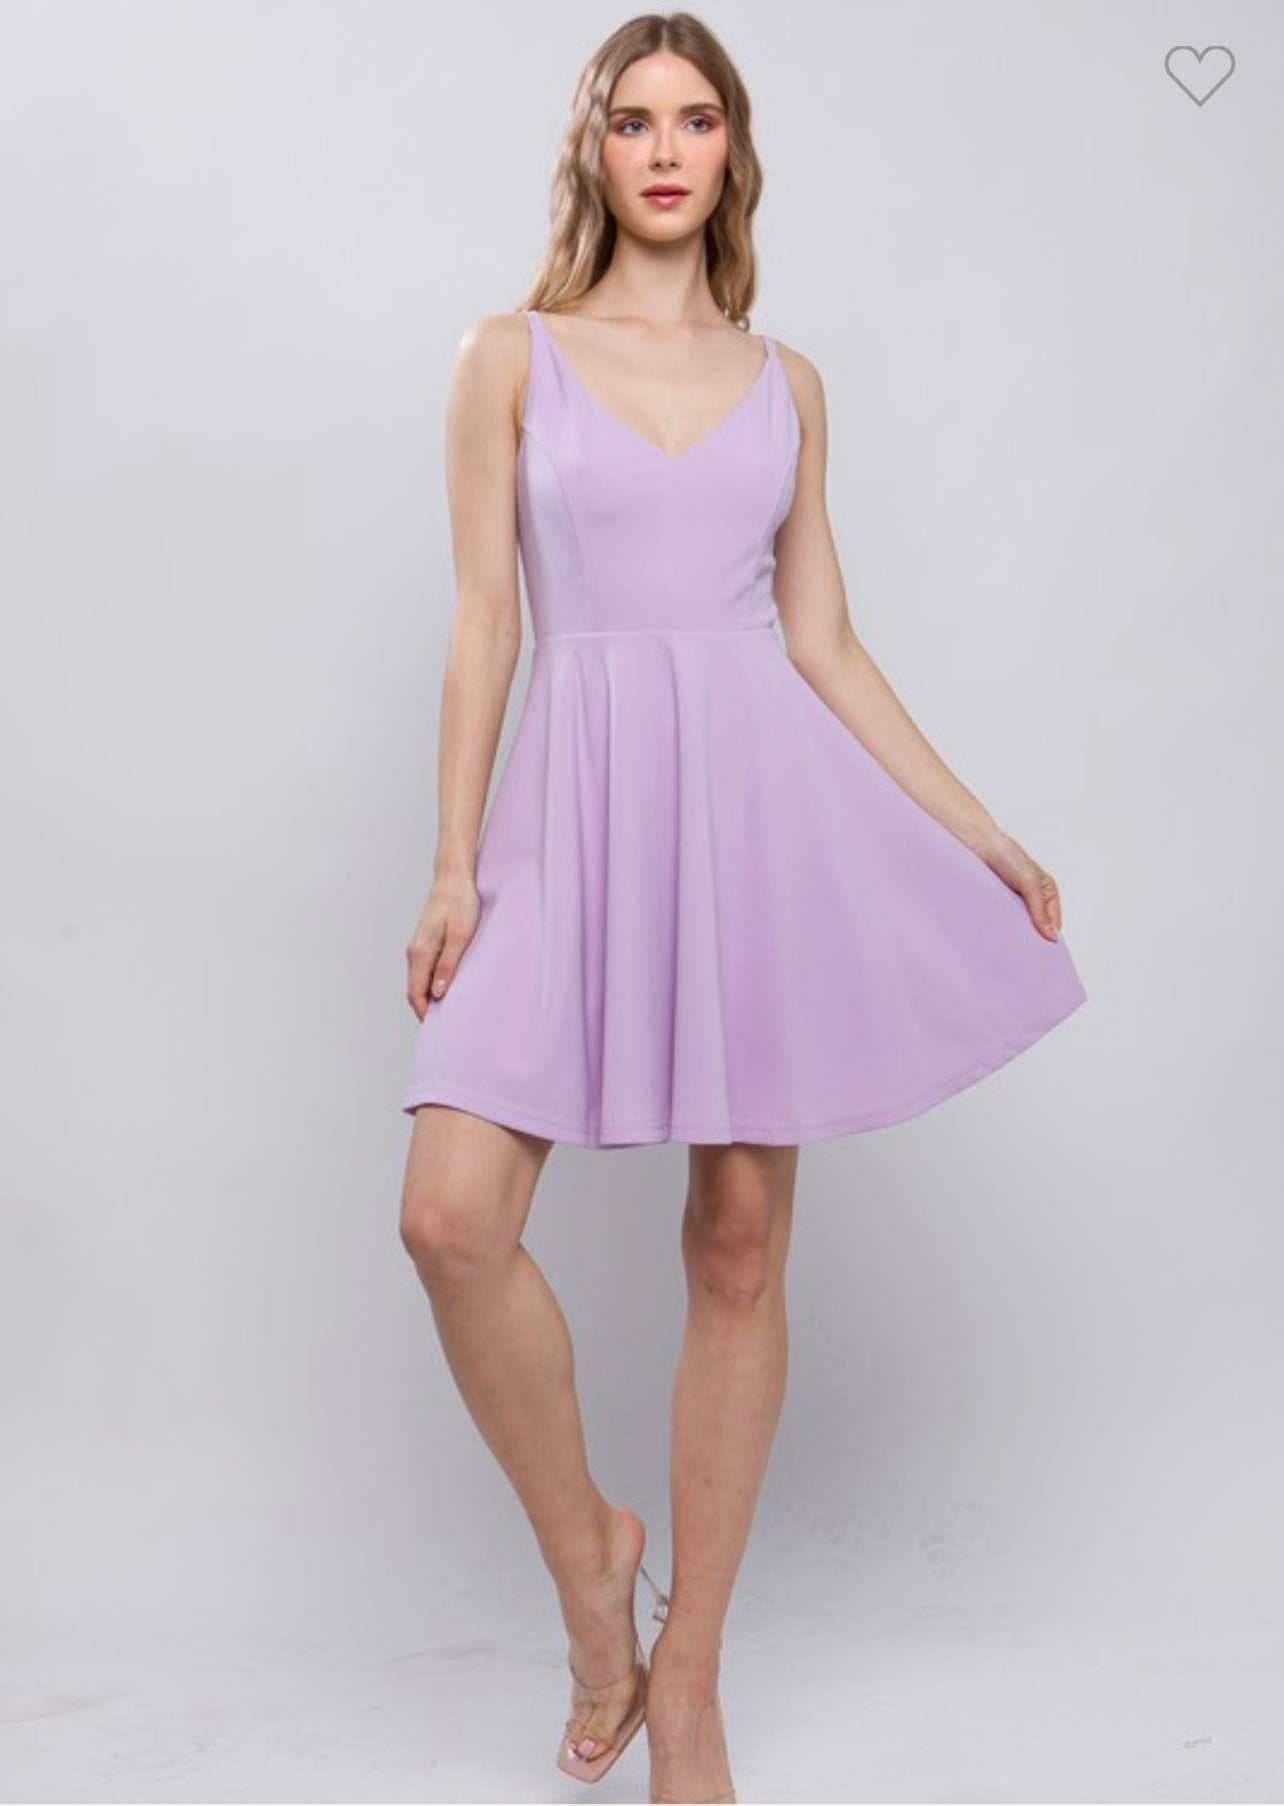 The Lakeside lilac dress